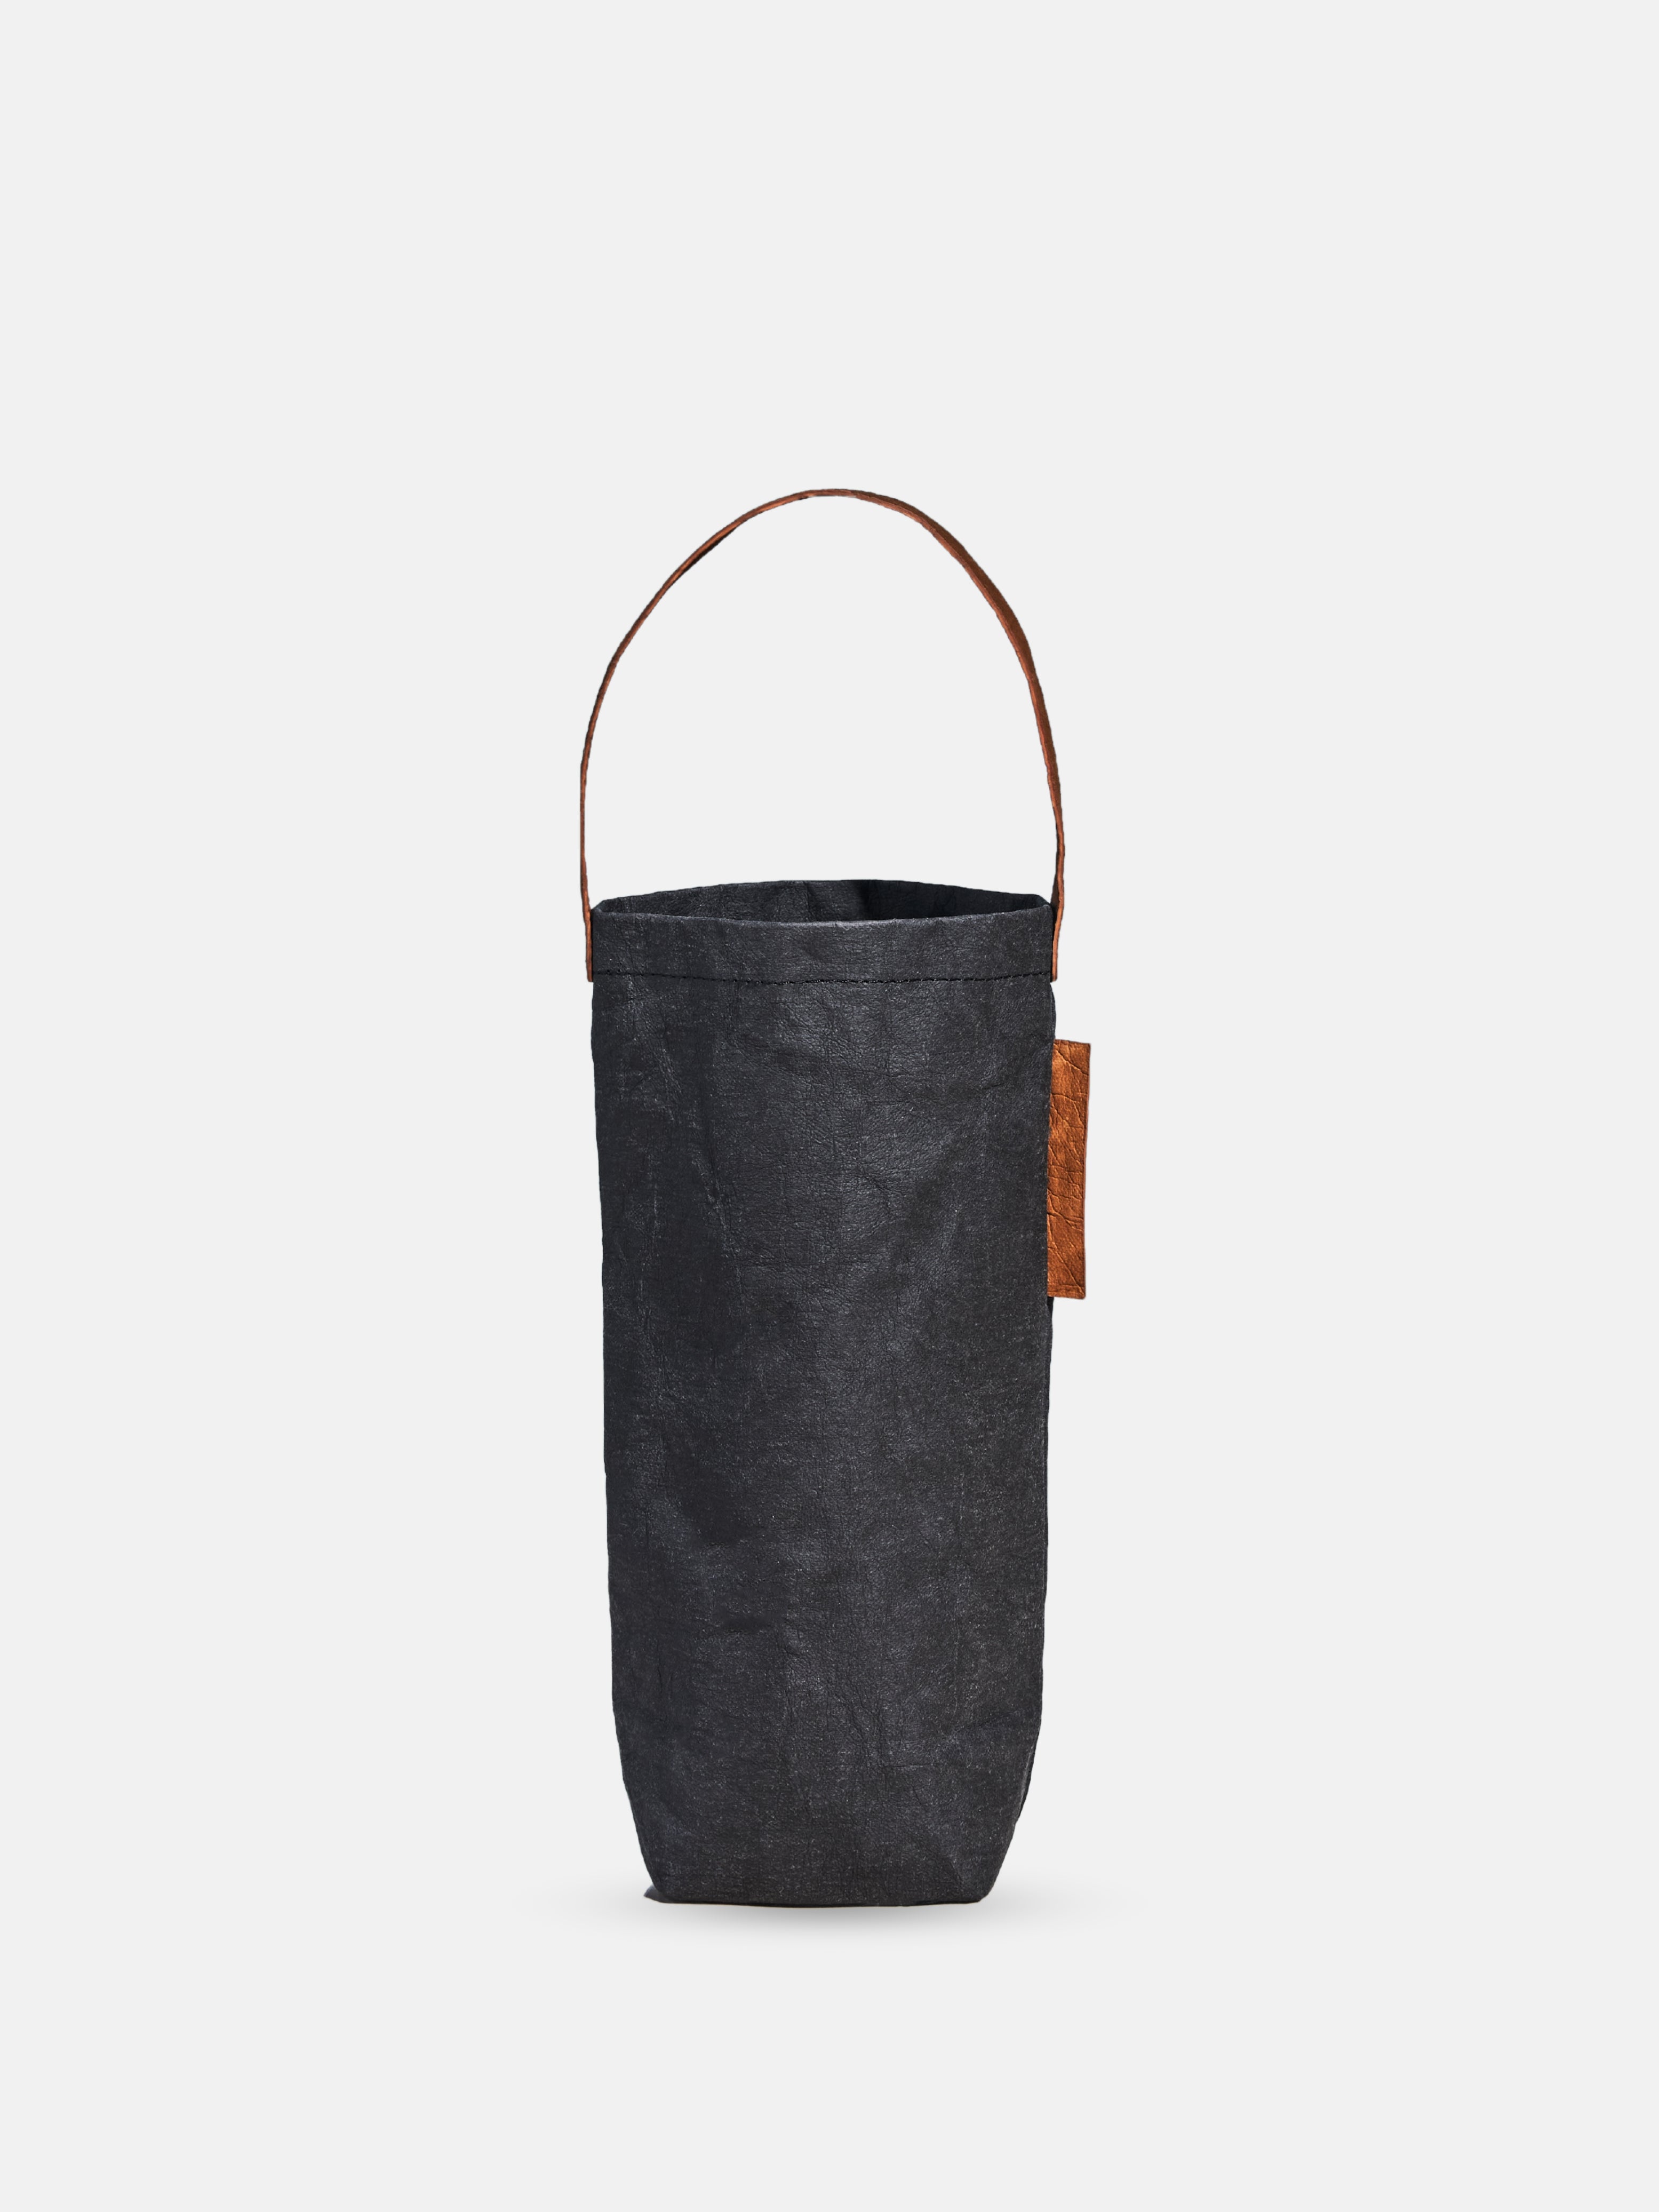 INSULATED WINE BAG S/2, WHITE & BLACK CHECK, PURSE | Wild Eye Designs